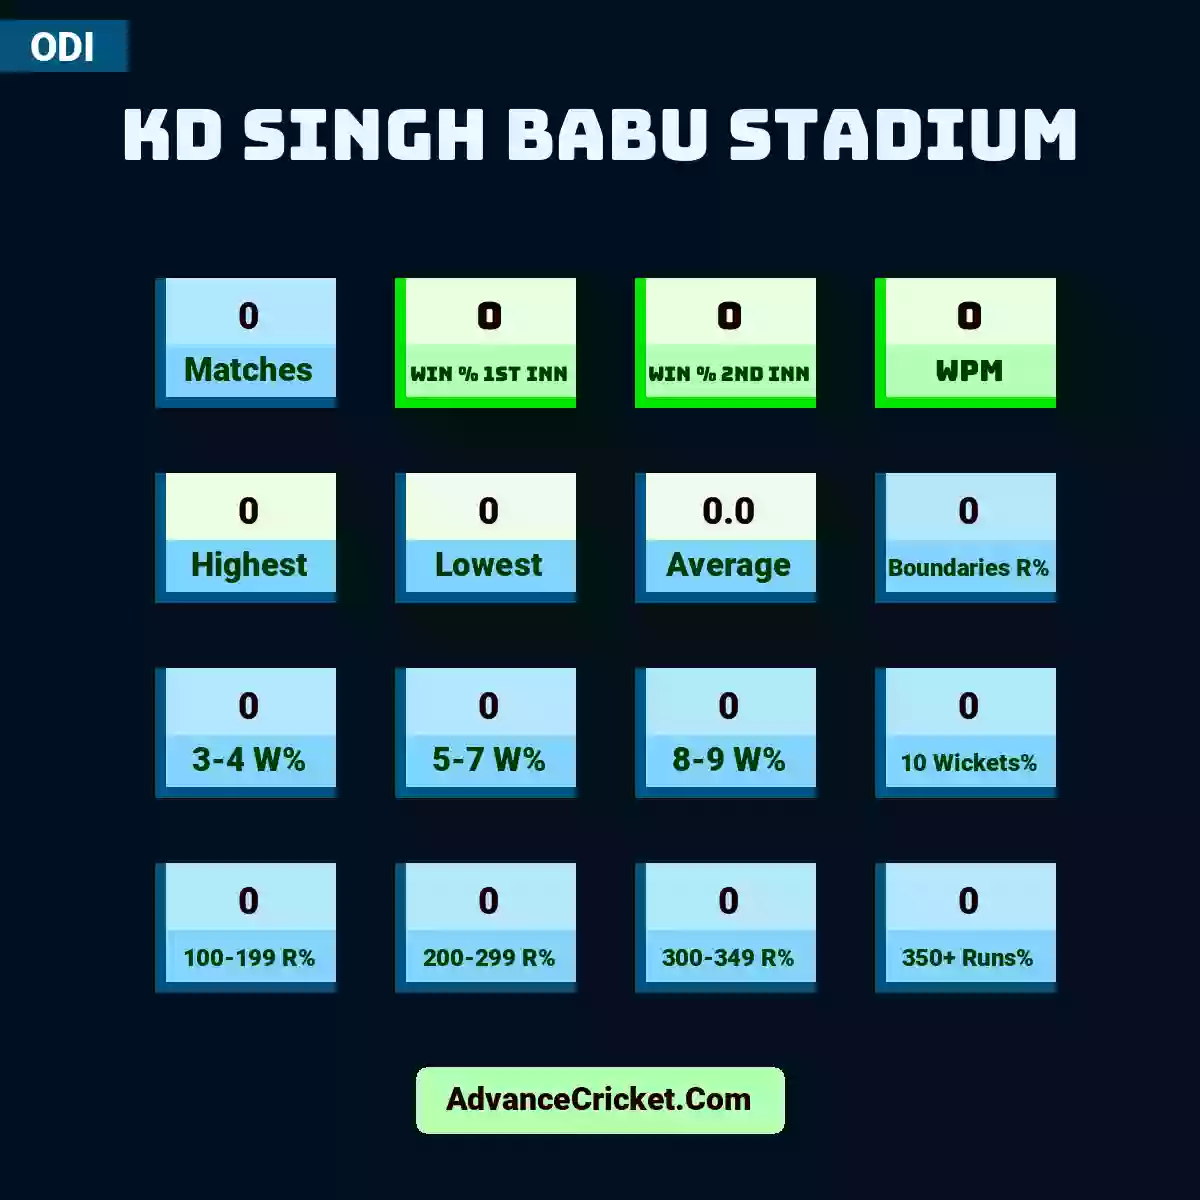 Image showing KD Singh Babu Stadium with Matches: 0, Win % 1st Inn: 0, Win % 2nd Inn: 0, WPM: 0, Highest: 0, Lowest: 0, Average: 0.0, Boundaries R%: 0, 3-4 W%: 0, 5-7 W%: 0, 8-9 W%: 0, 10 Wickets%: 0, 100-199 R%: 0, 200-299 R%: 0, 300-349 R%: 0, 350+ Runs%: 0.